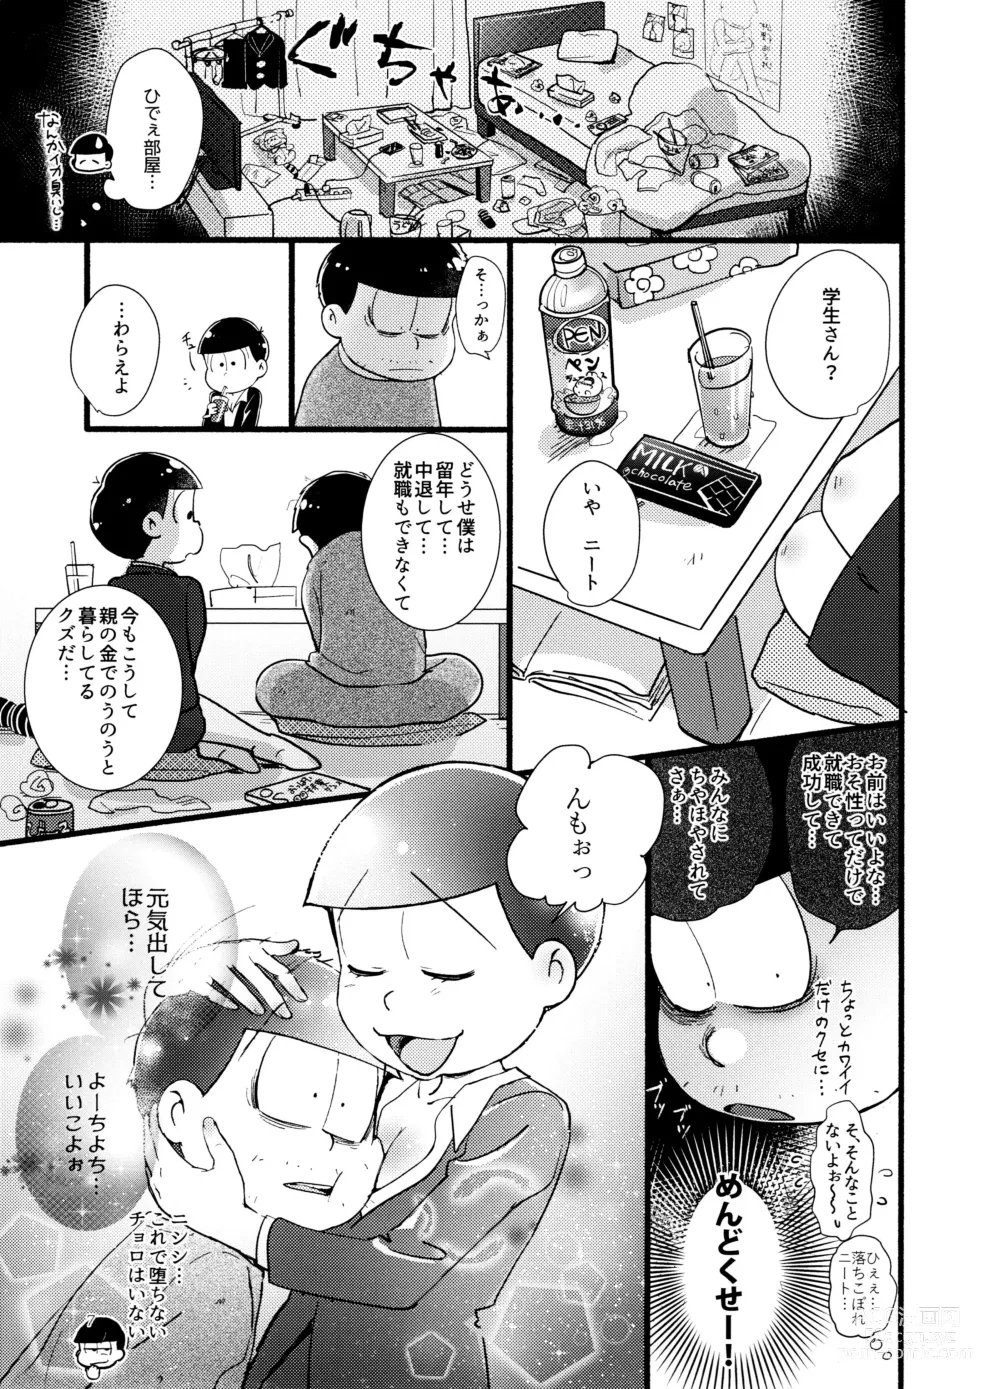 Page 7 of doujinshi Momare Keiyaku